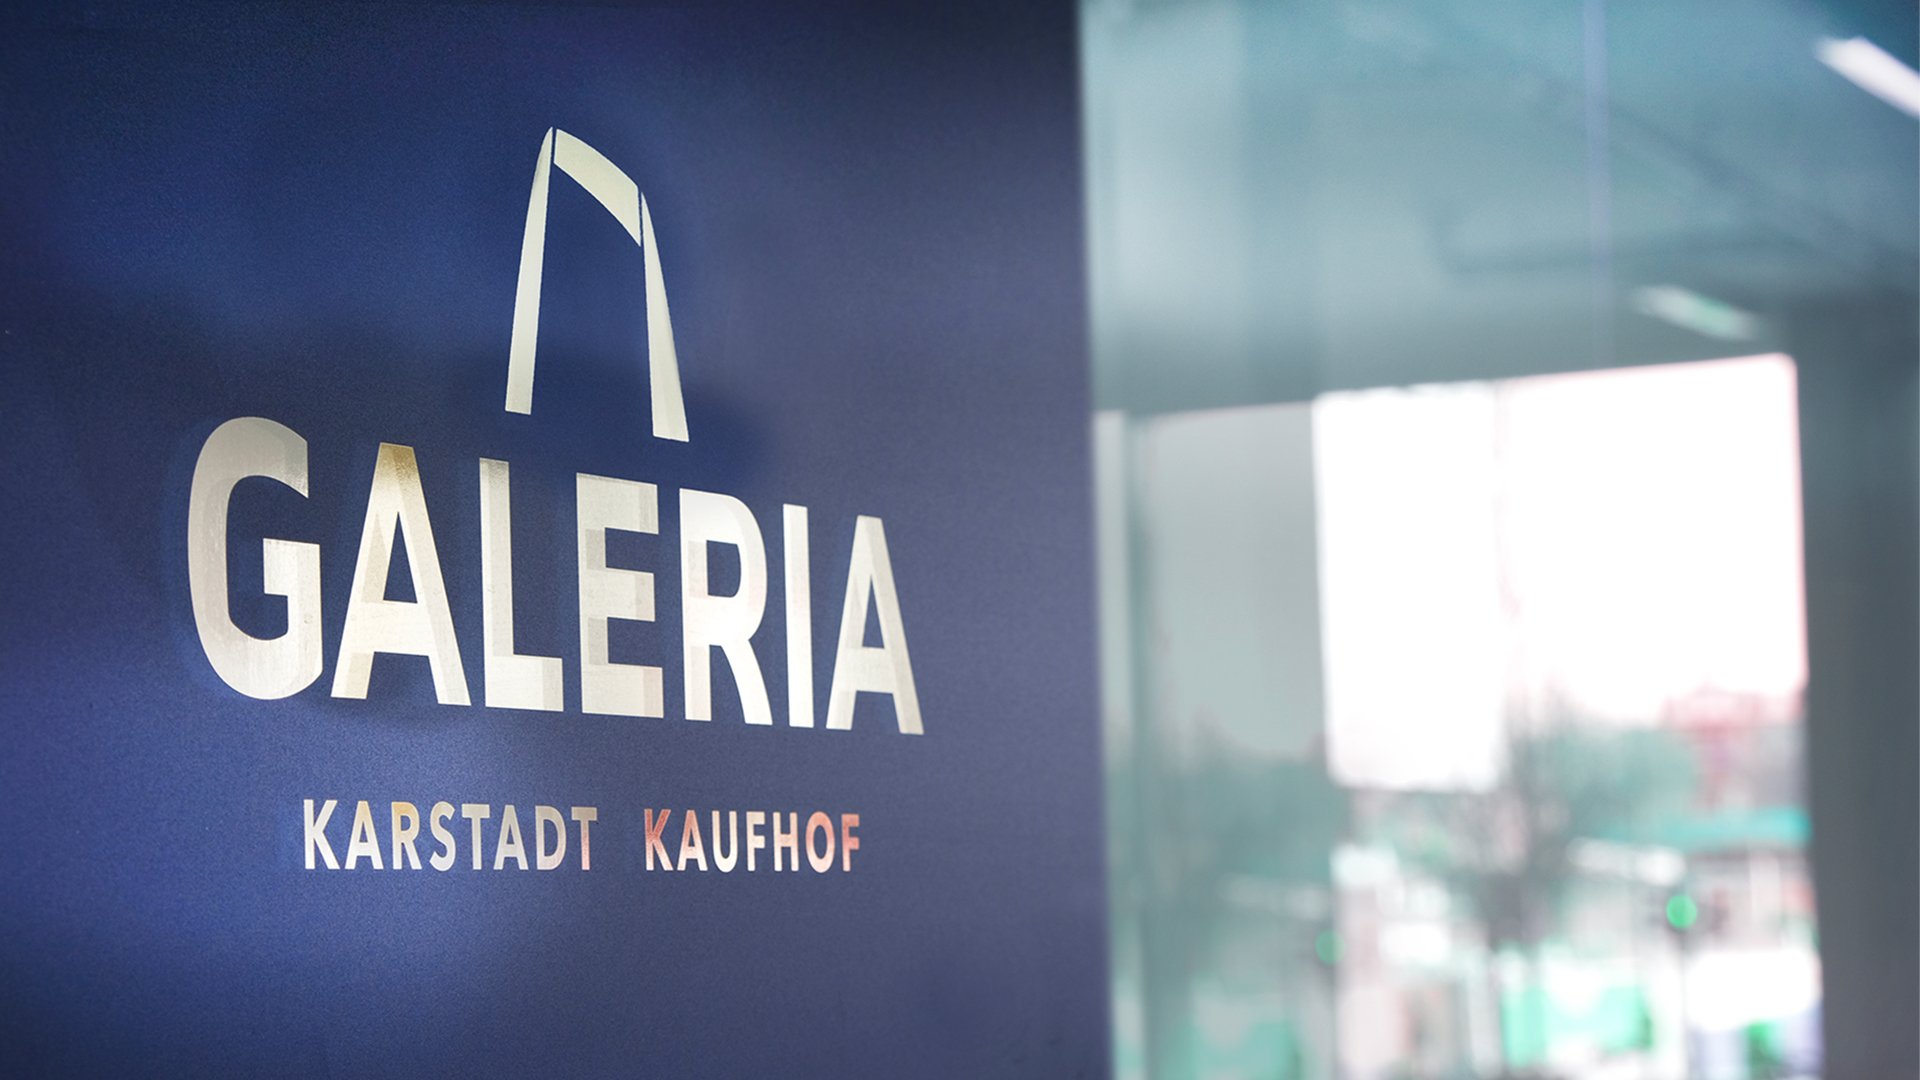 Logo des Galeria Karstadt Kaufhof | ARD-aktuell/ Korinth